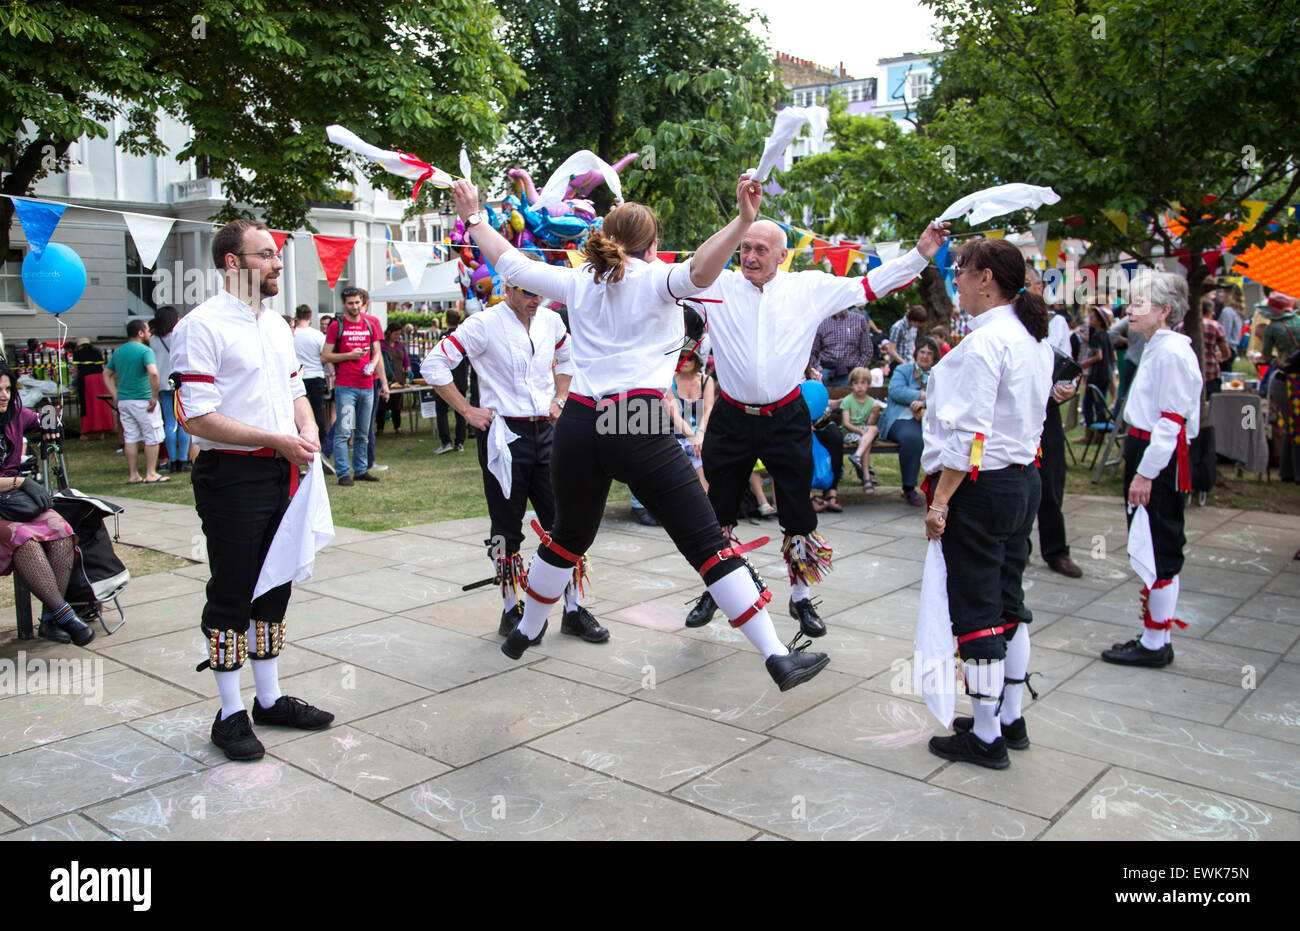 Morris dancers performing and dancing at a festival Stock Photo